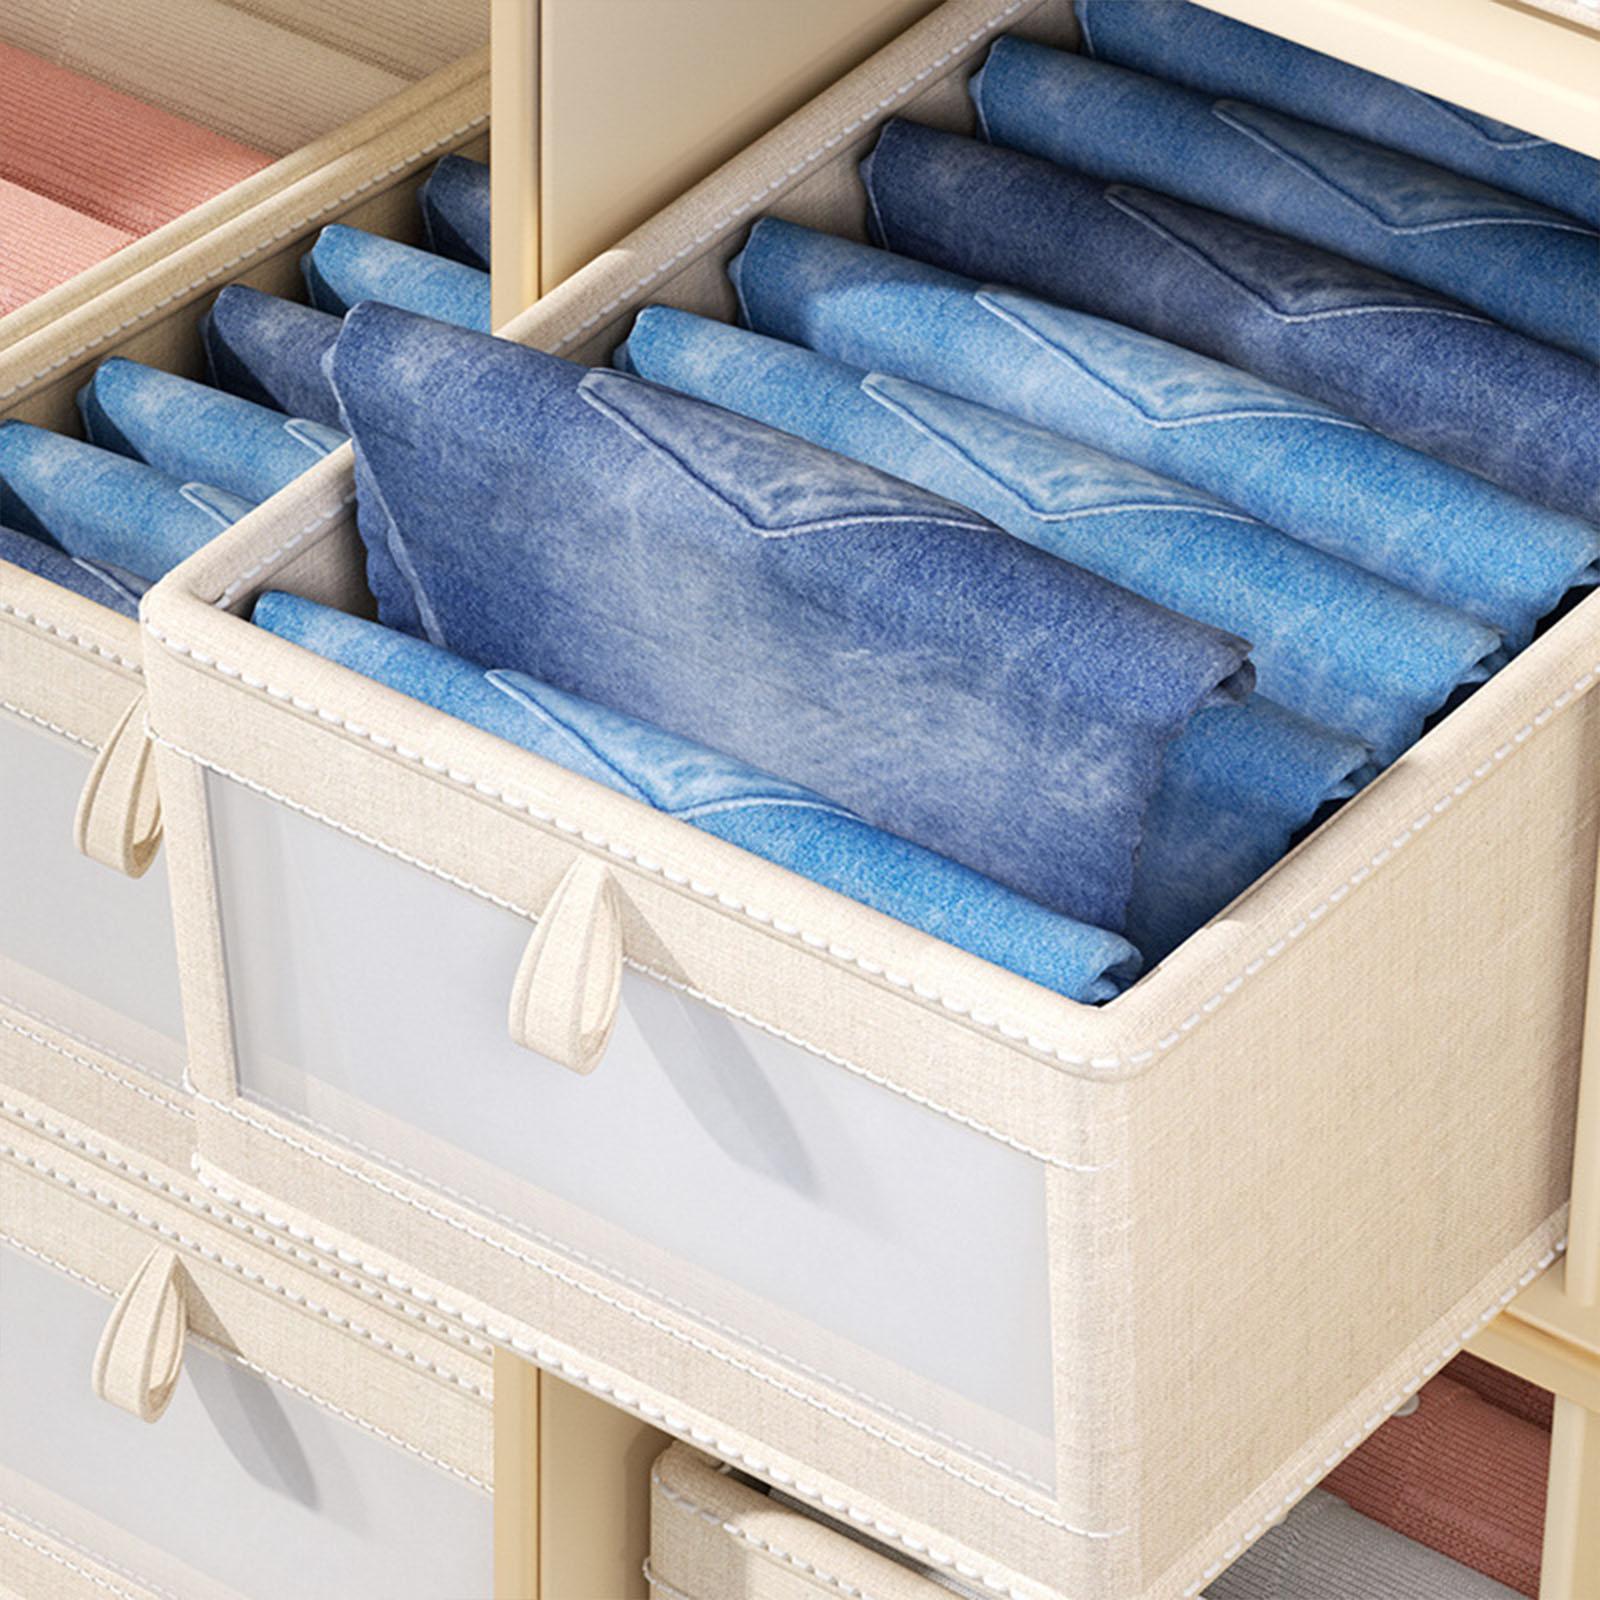 Foldable Clothes Storage Bin Sturdy Basket for Blanket Bed Sheets Comforters L